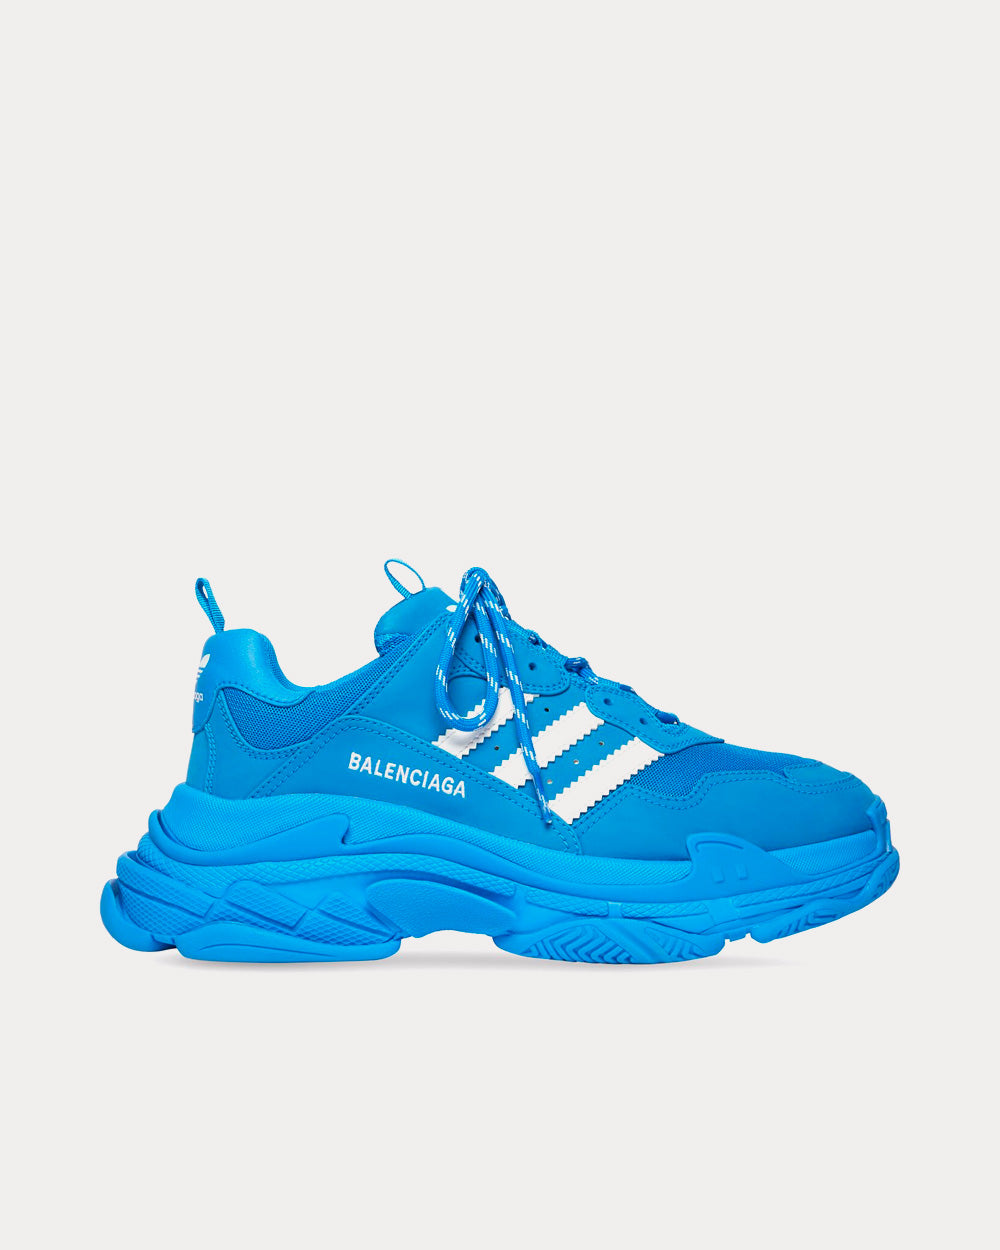 Balenciaga x Adidas Triple S Blue / White Low Top Sneakers - Sneak